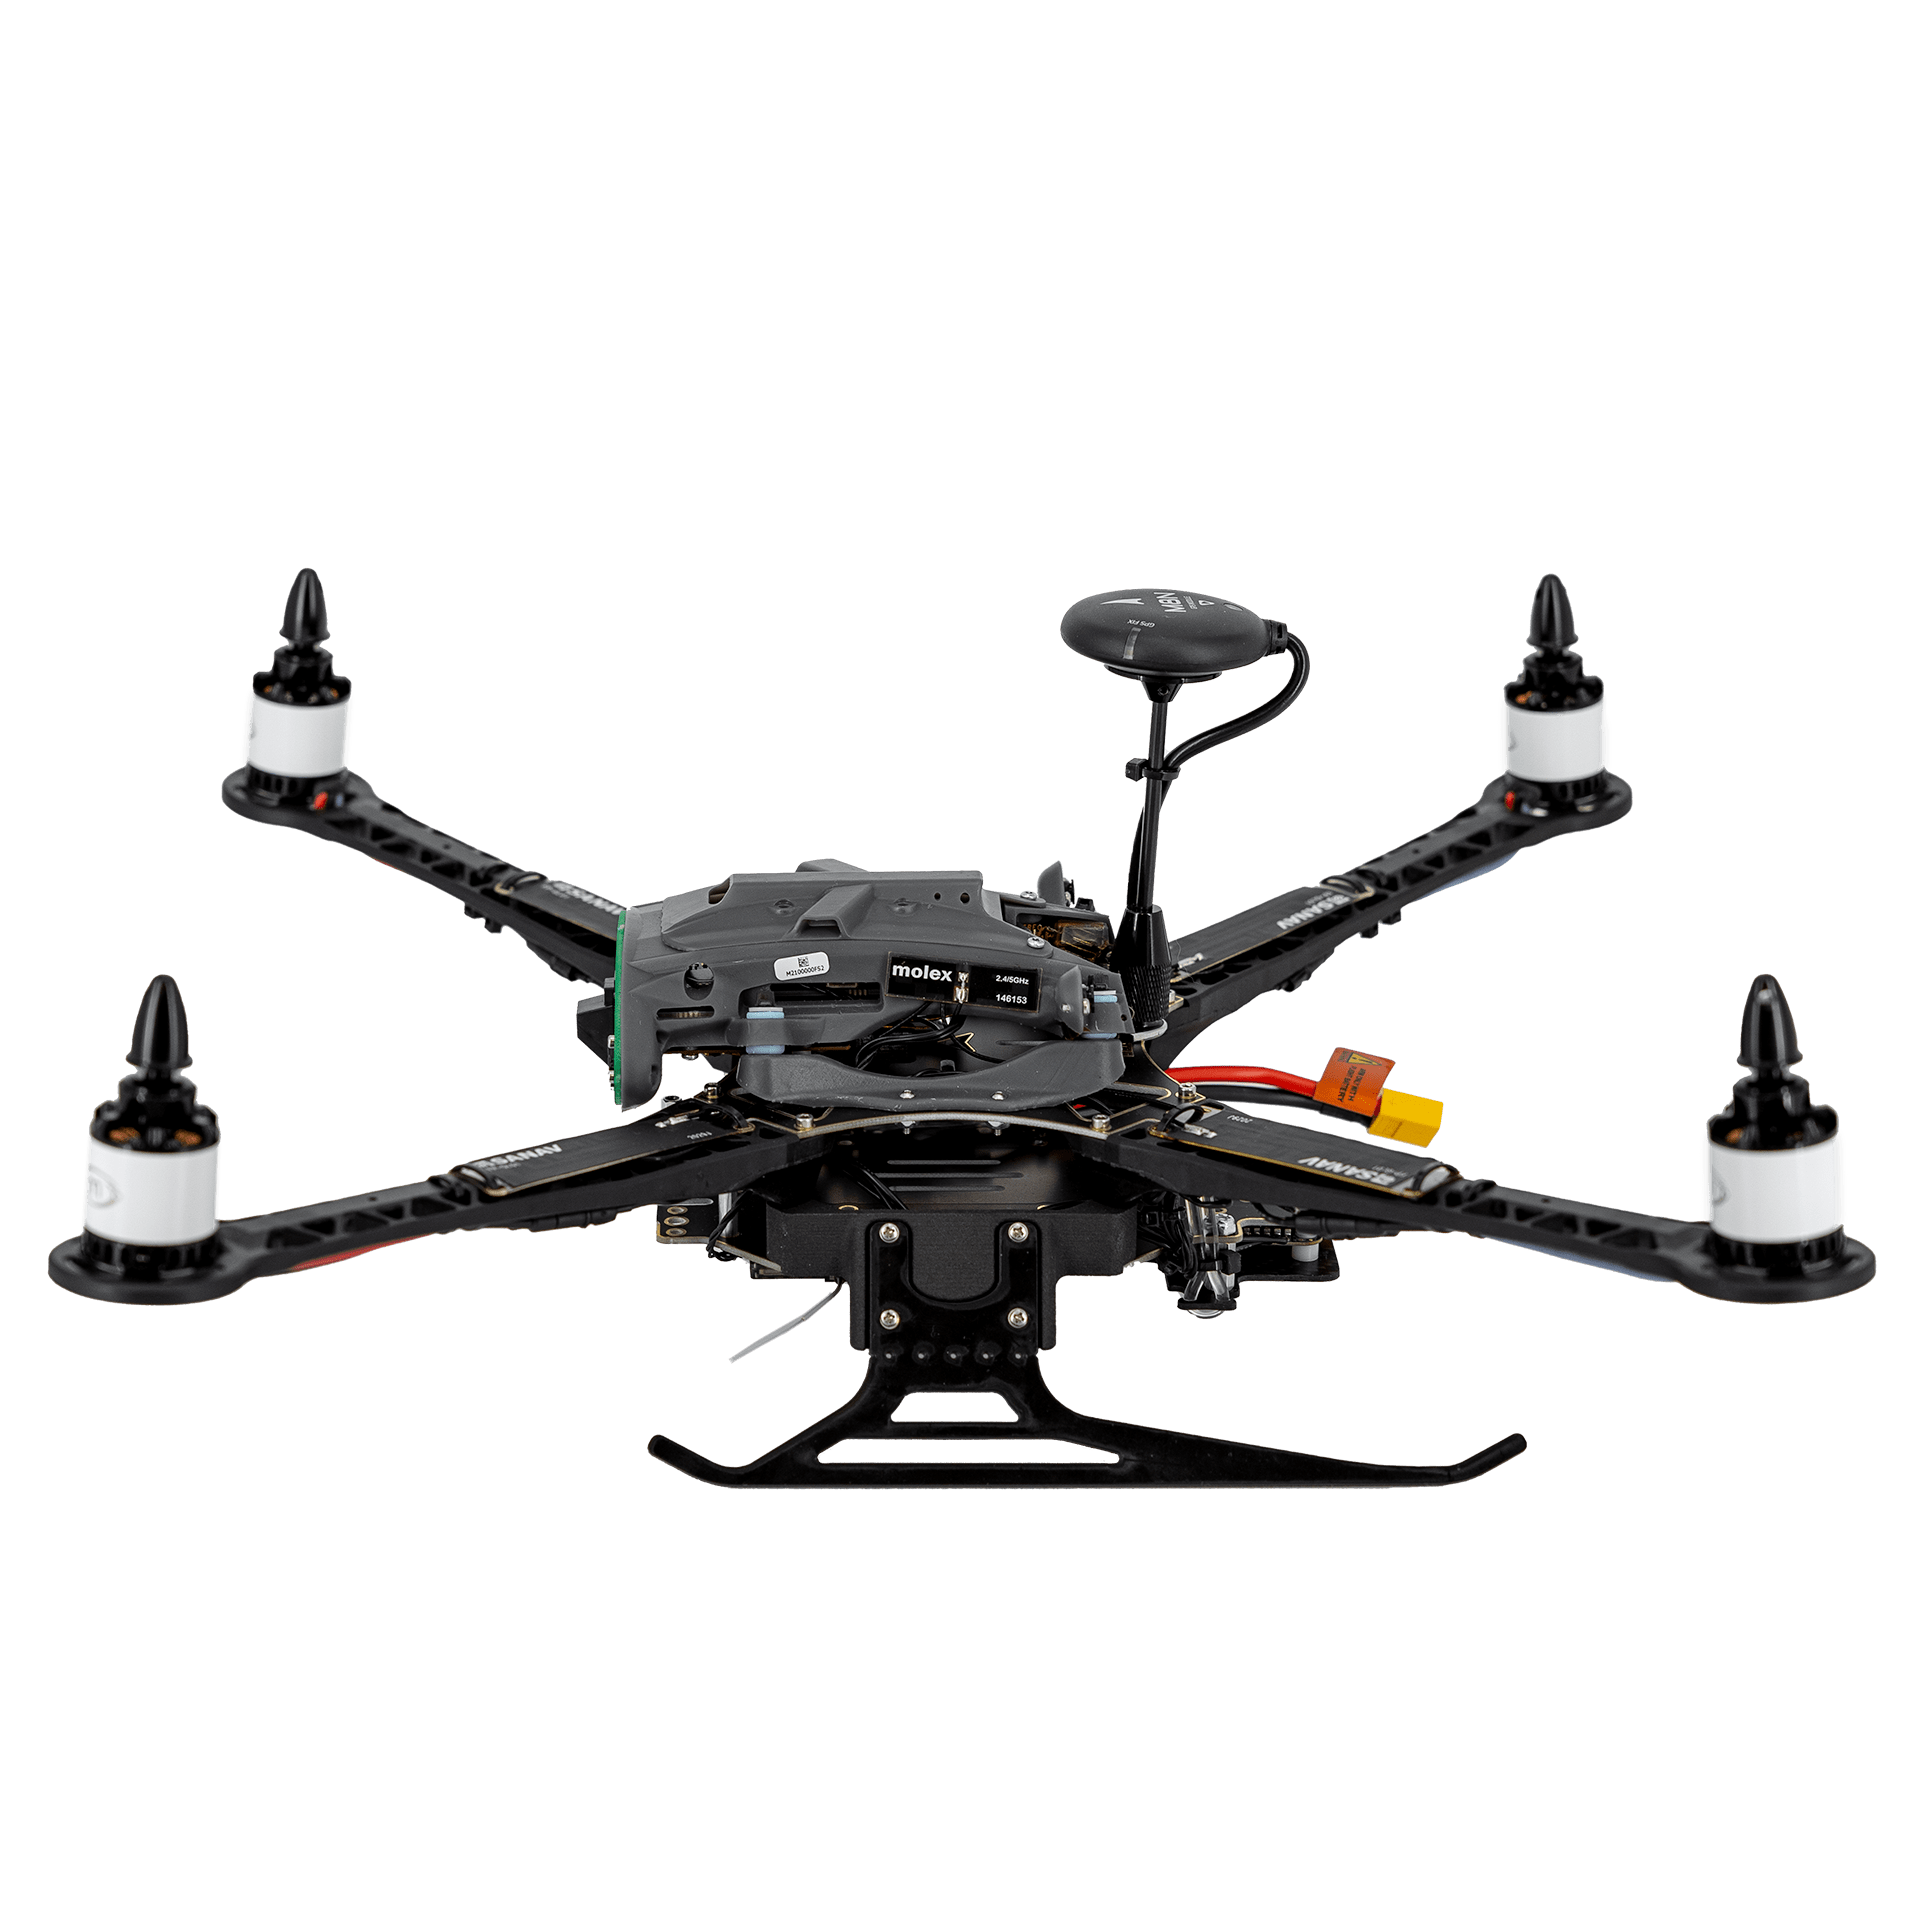 ModalAI, Inc. Drone Qualcomm Flight™ RB5 5G Platform Drone Reference Design